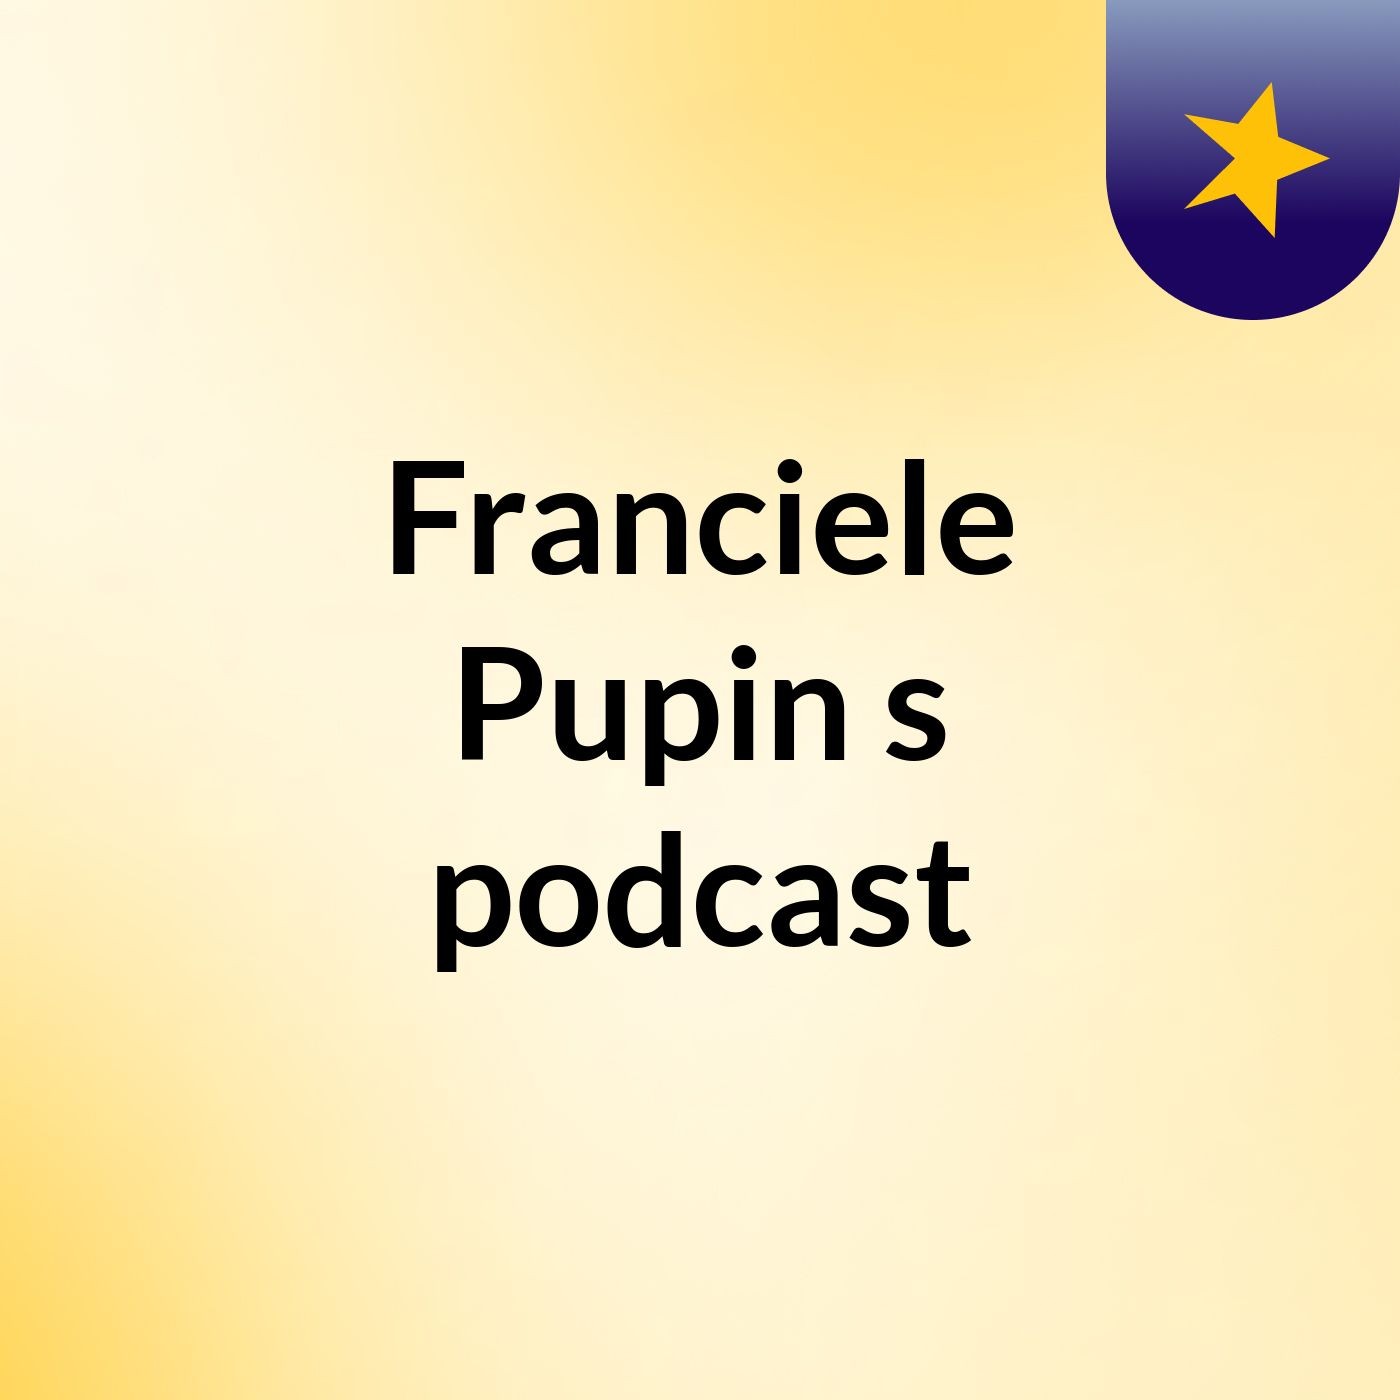 Franciele Pupin's podcast